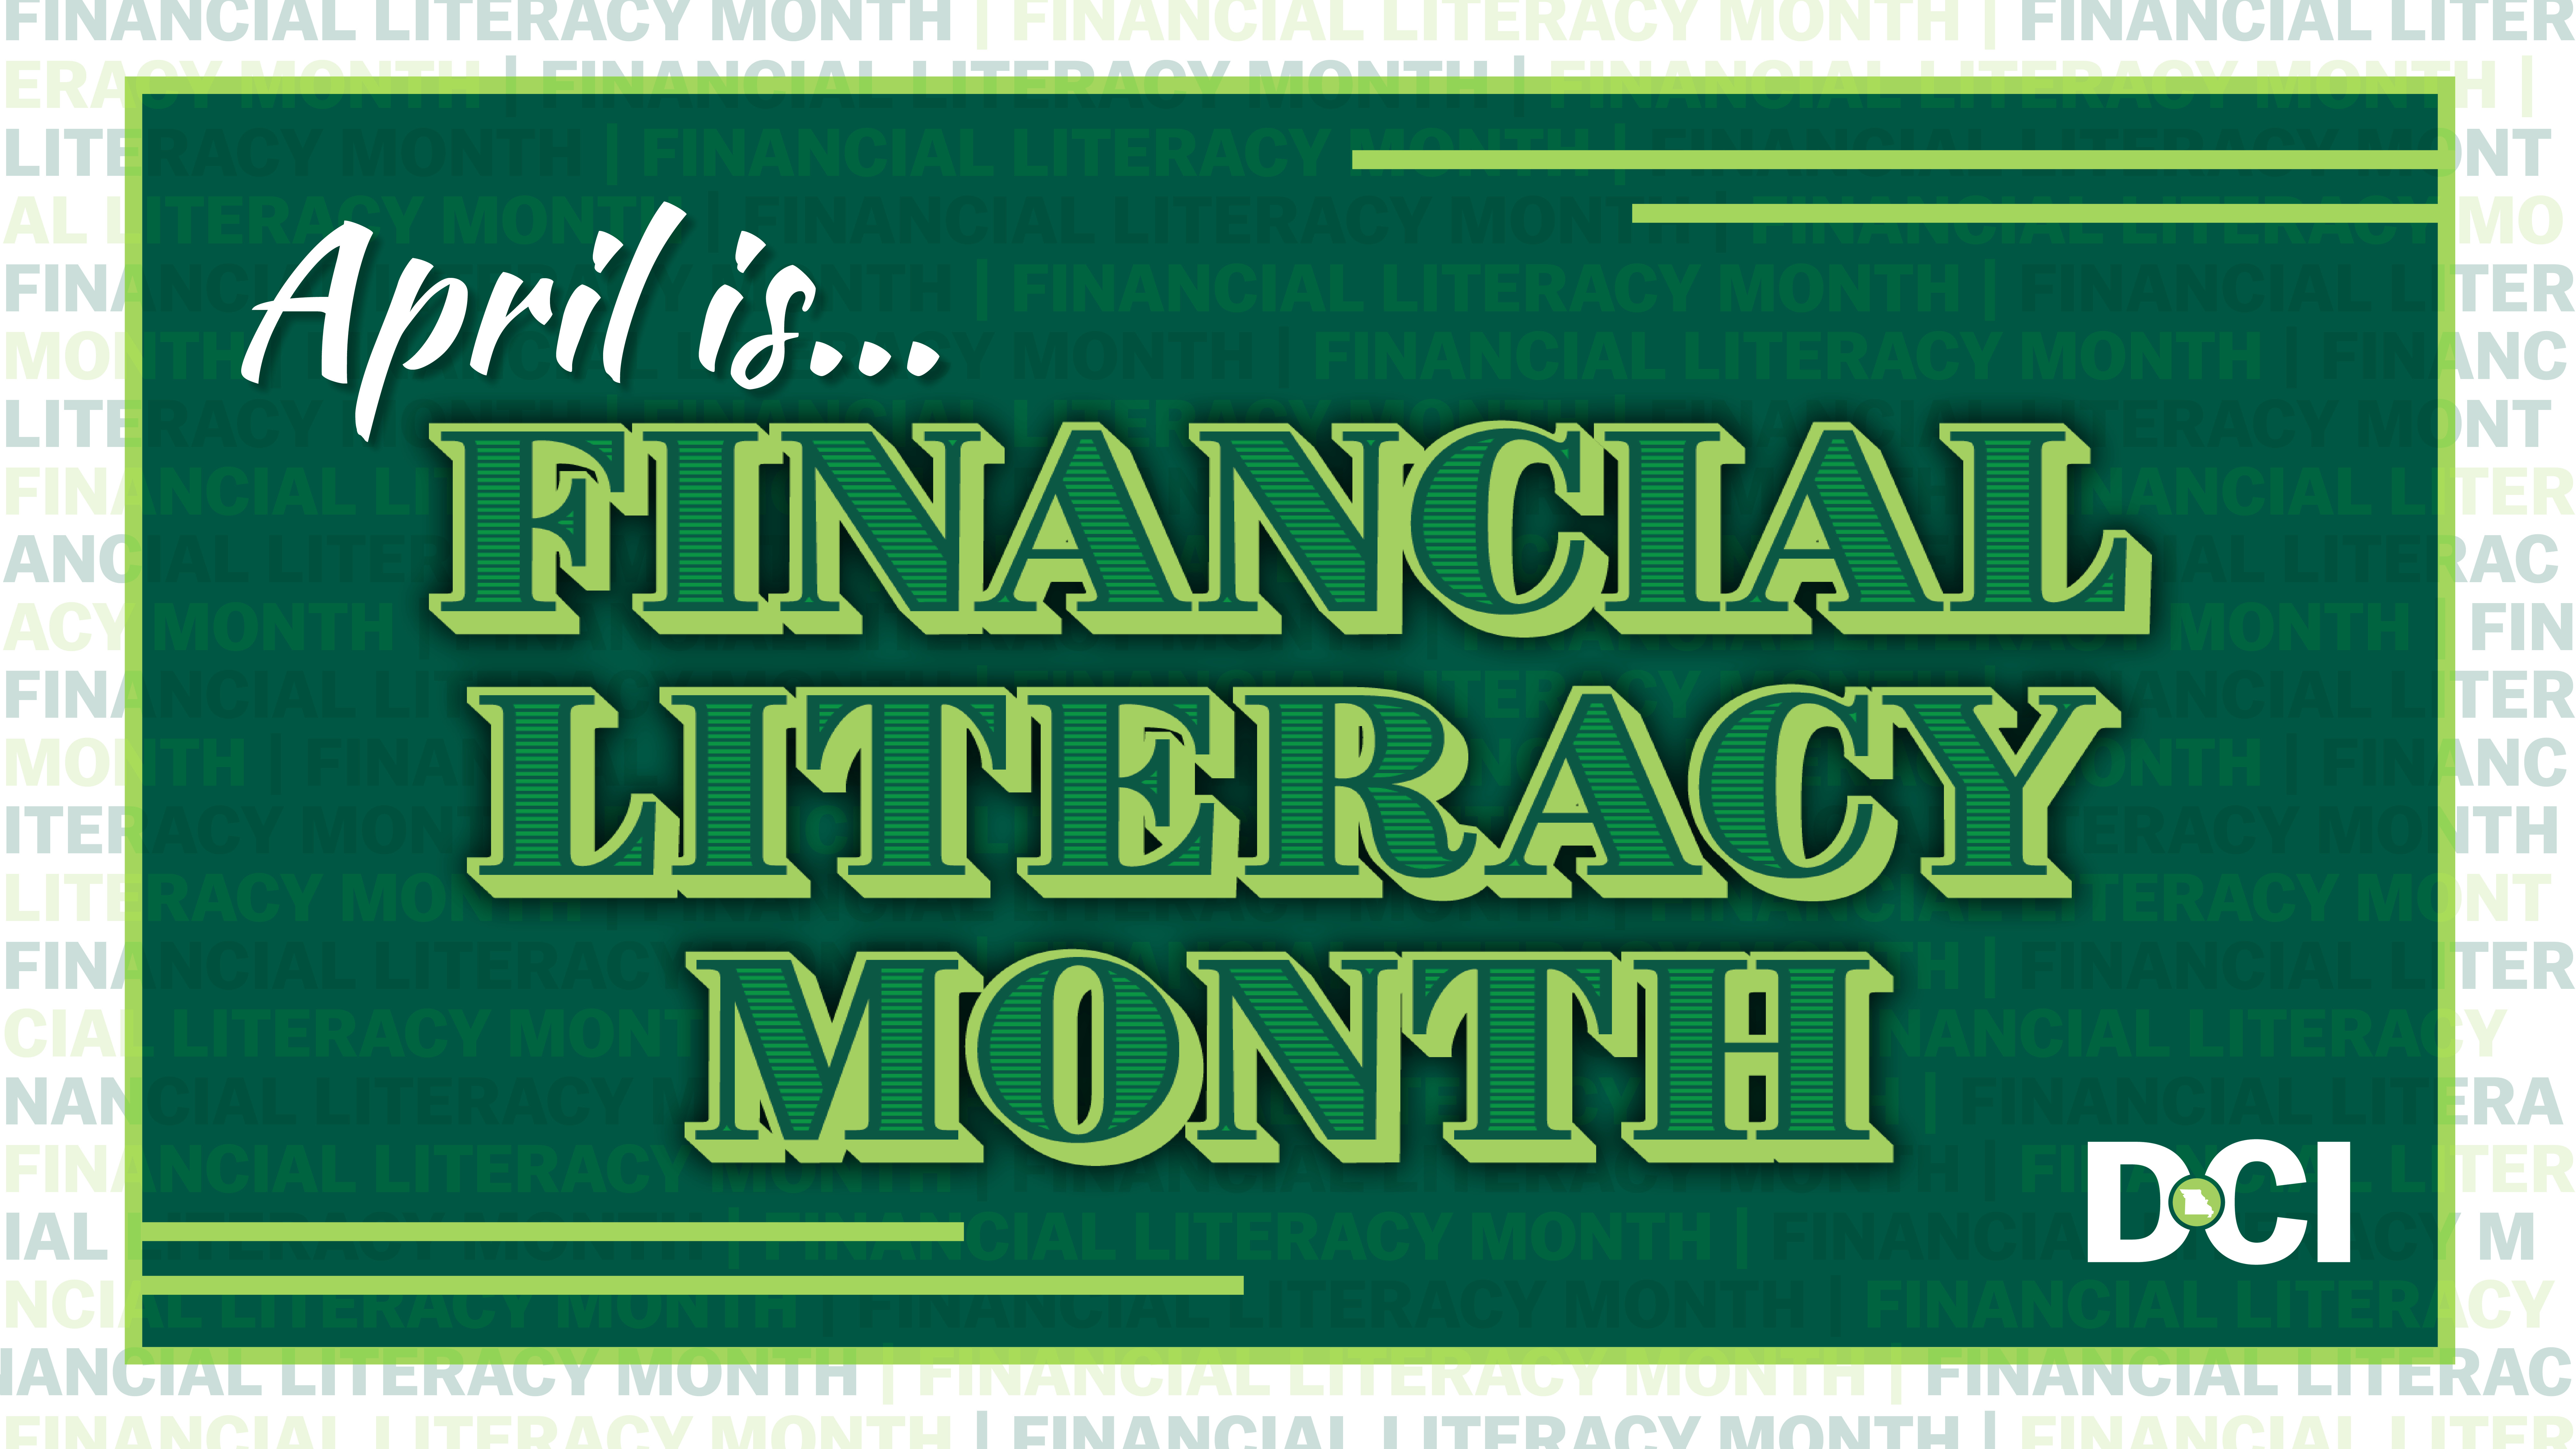 financial literacy month